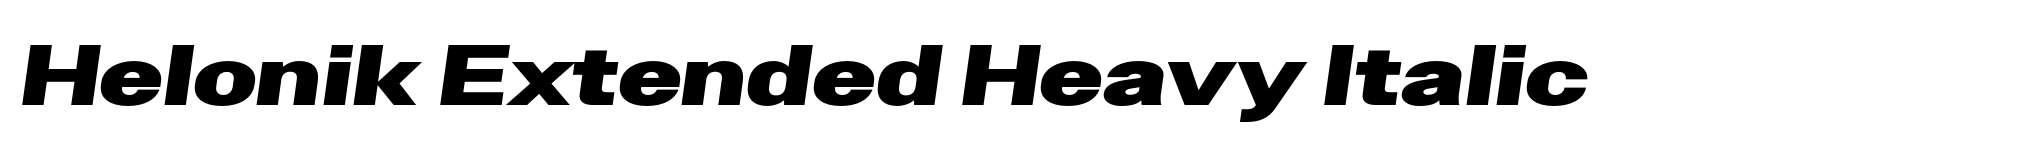 Helonik Extended Heavy Italic image